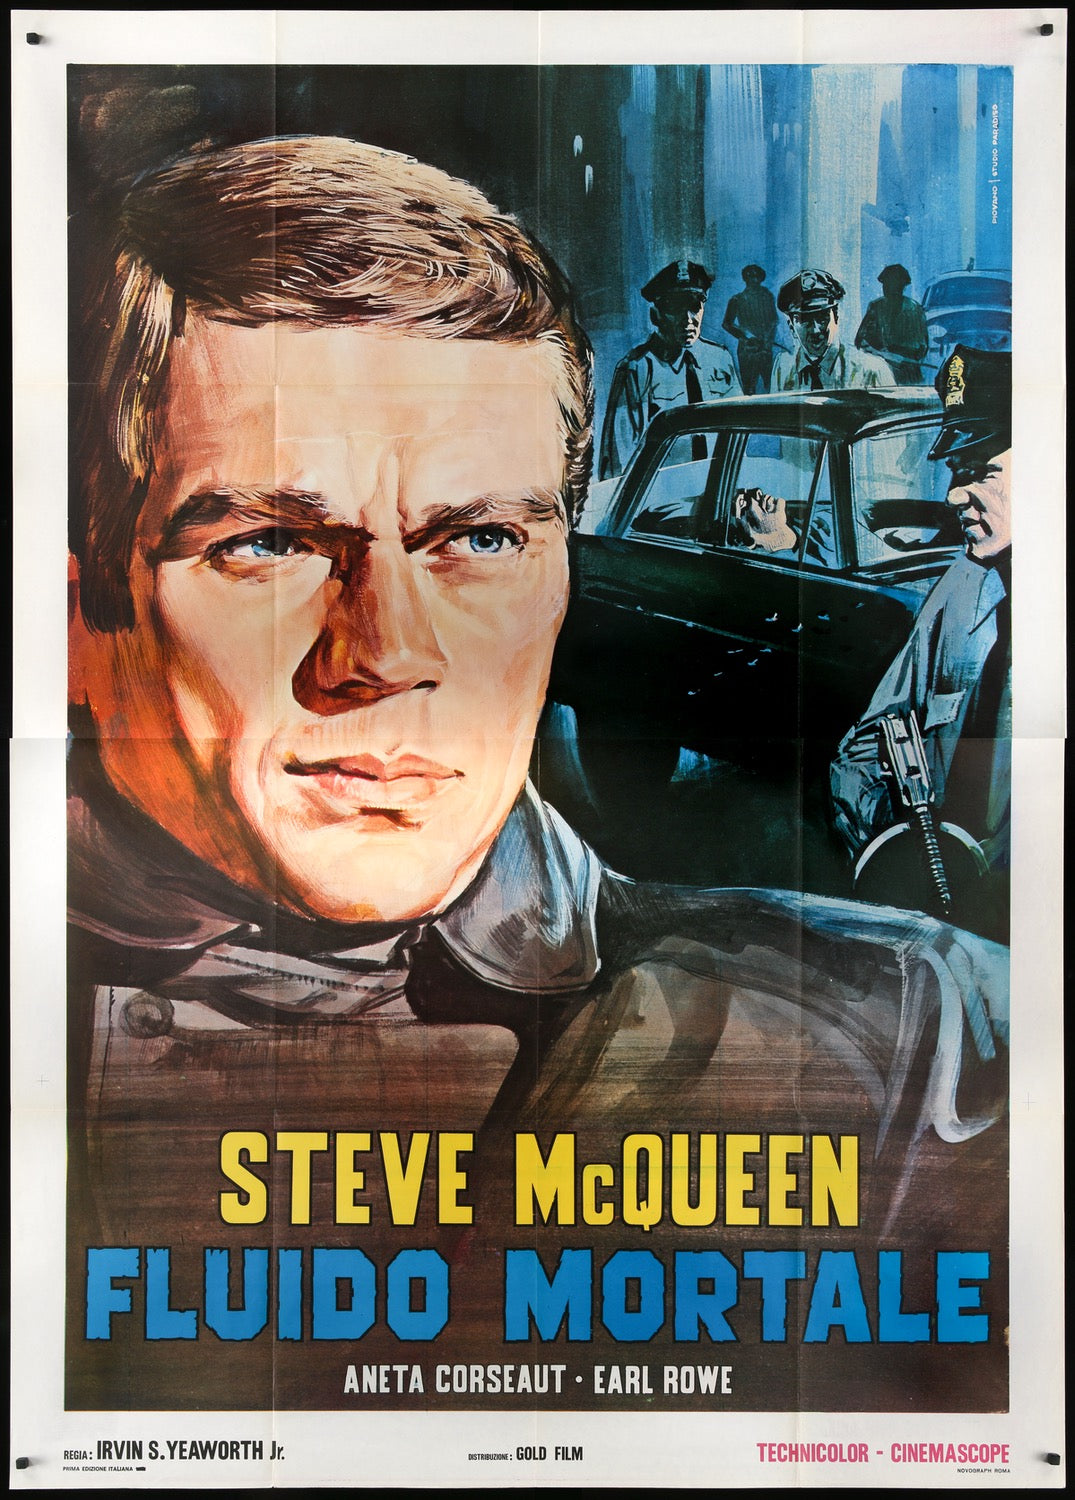 Blob (1958) original movie poster for sale at Original Film Art